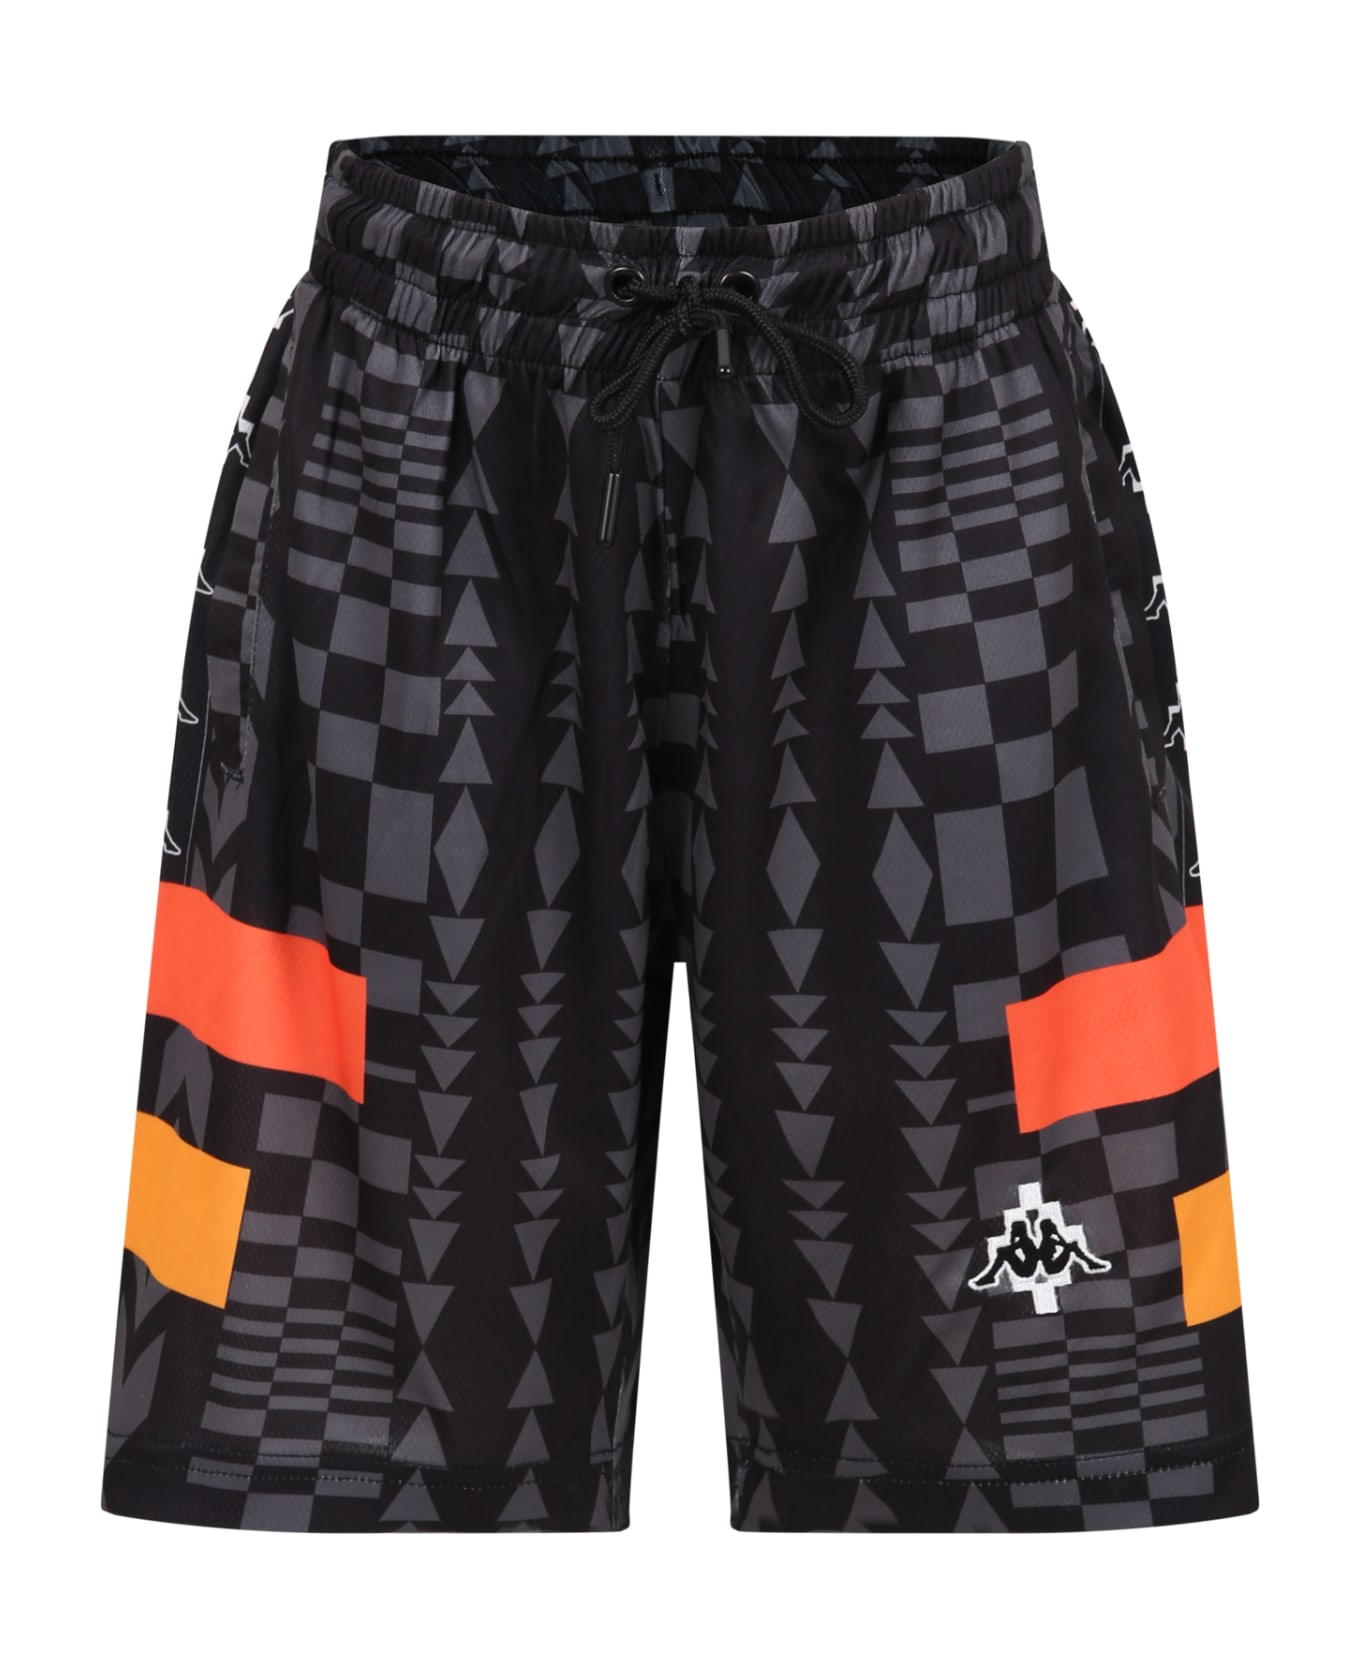 Marcelo Burlon Casual Black Shorts For Boy - Black